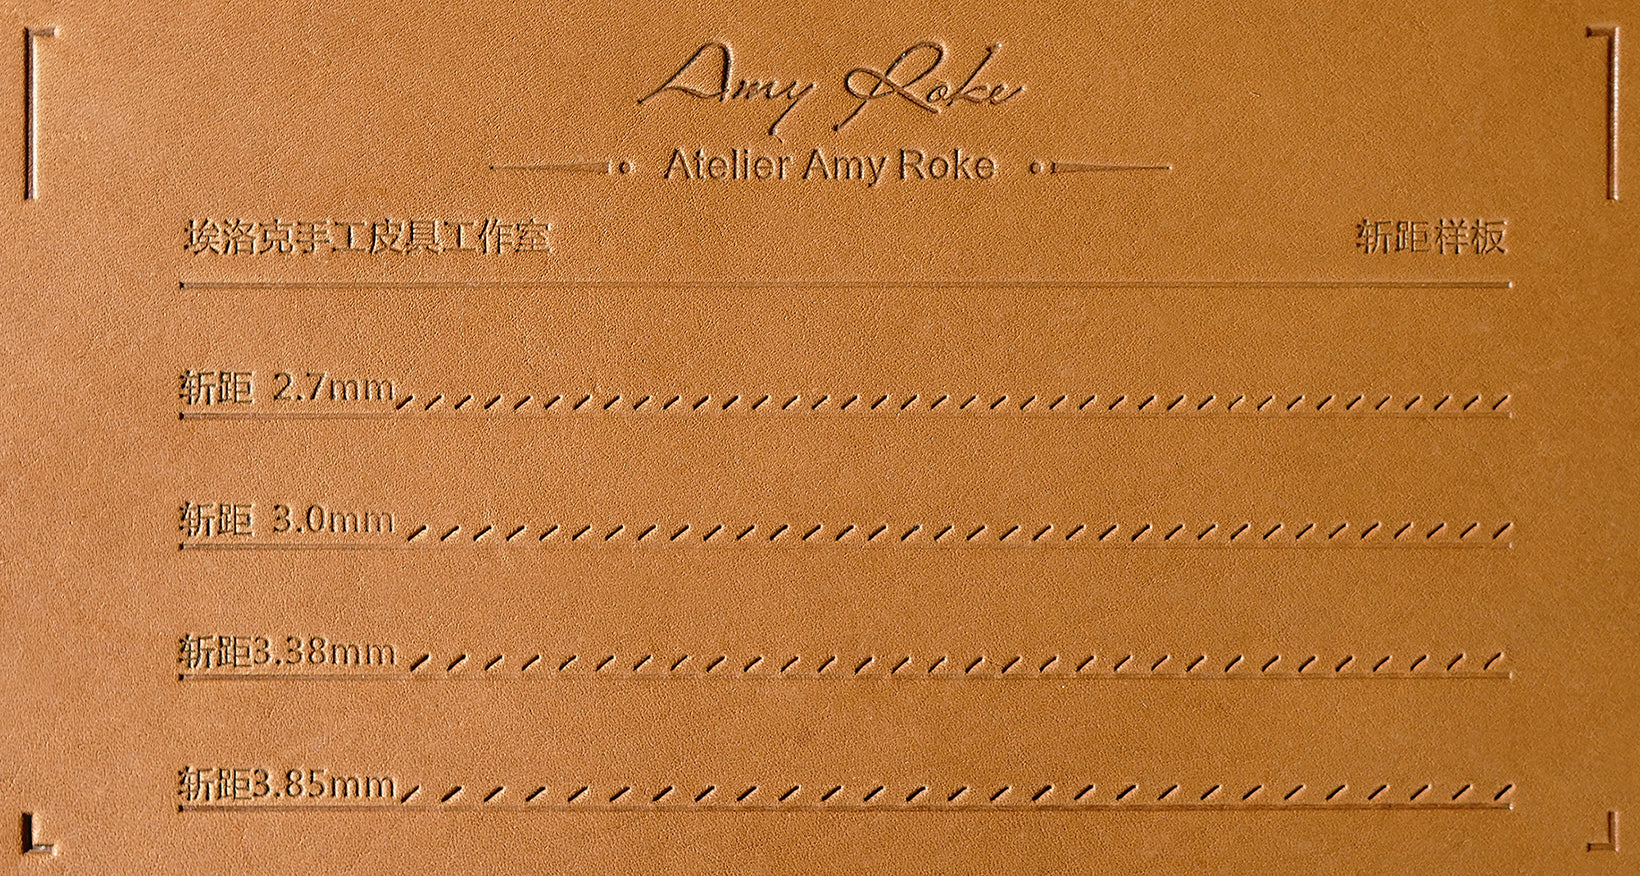 Amy Roke - Premium Pricking Irons